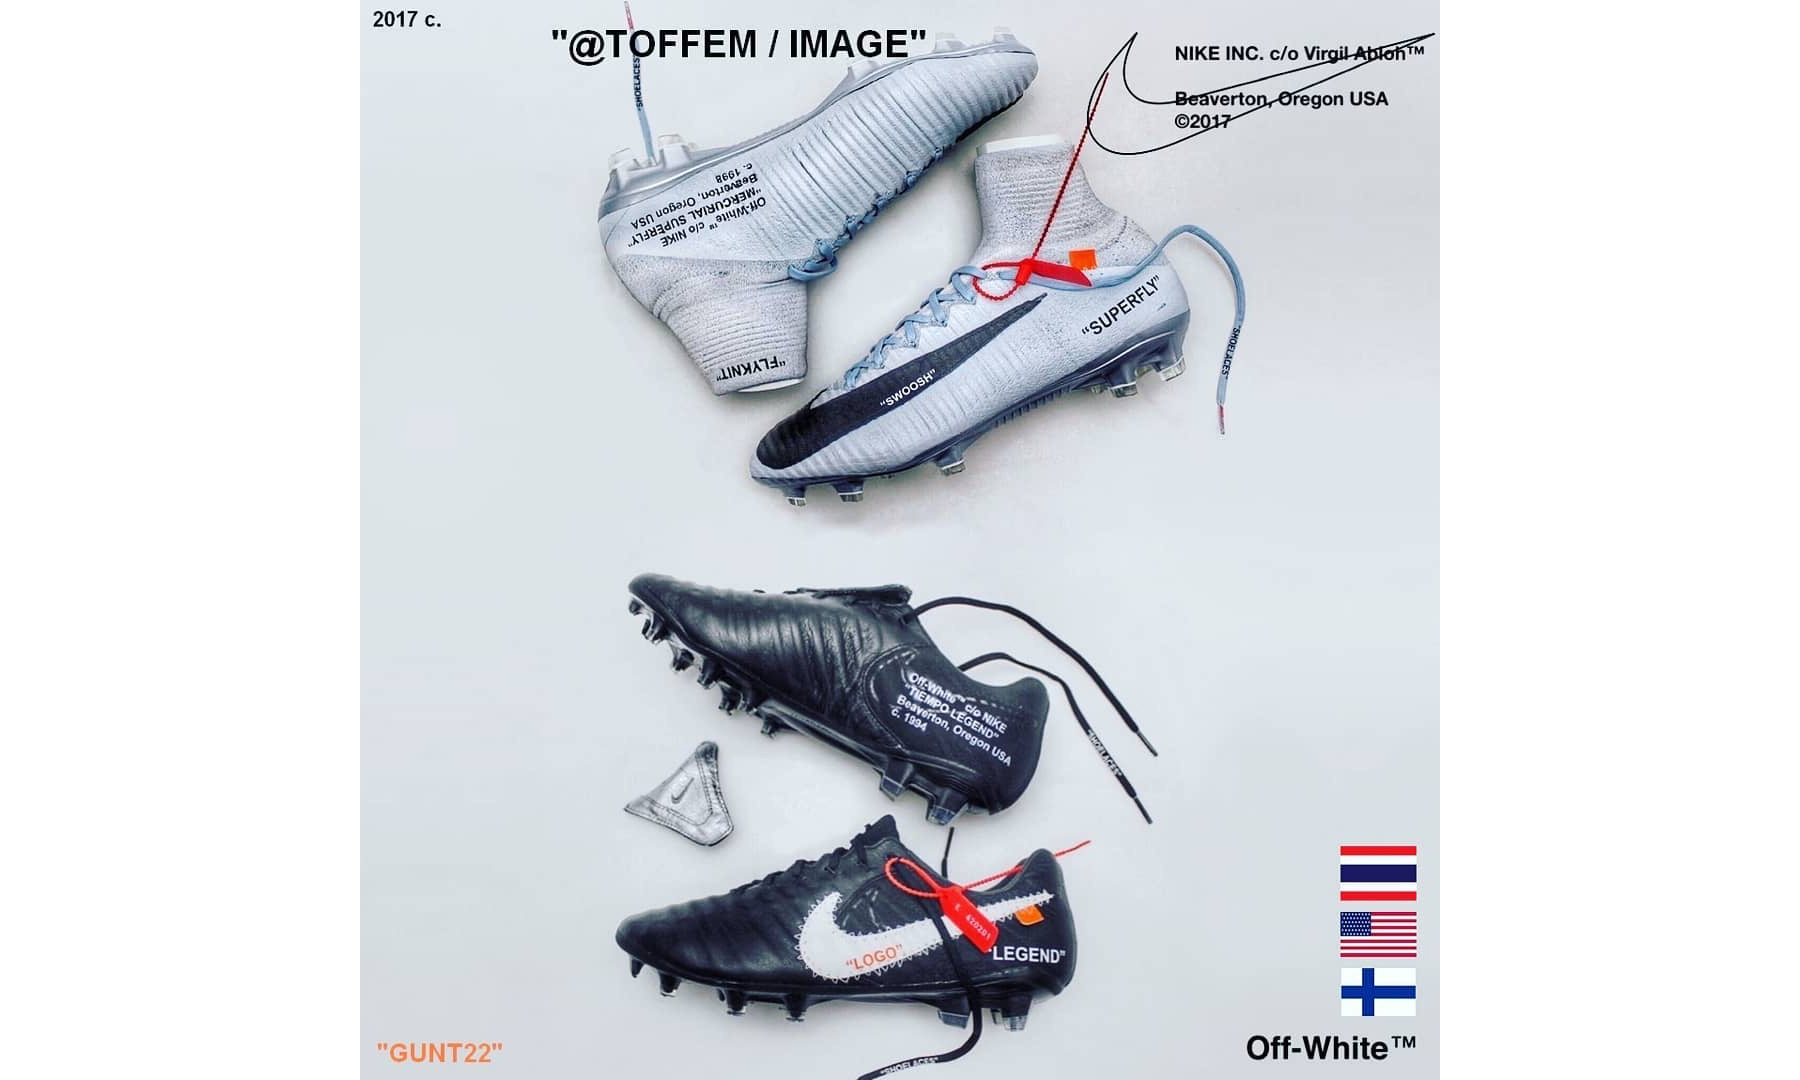 Off-White™ x Nike 足球联乘还没确定，单品提前曝光？